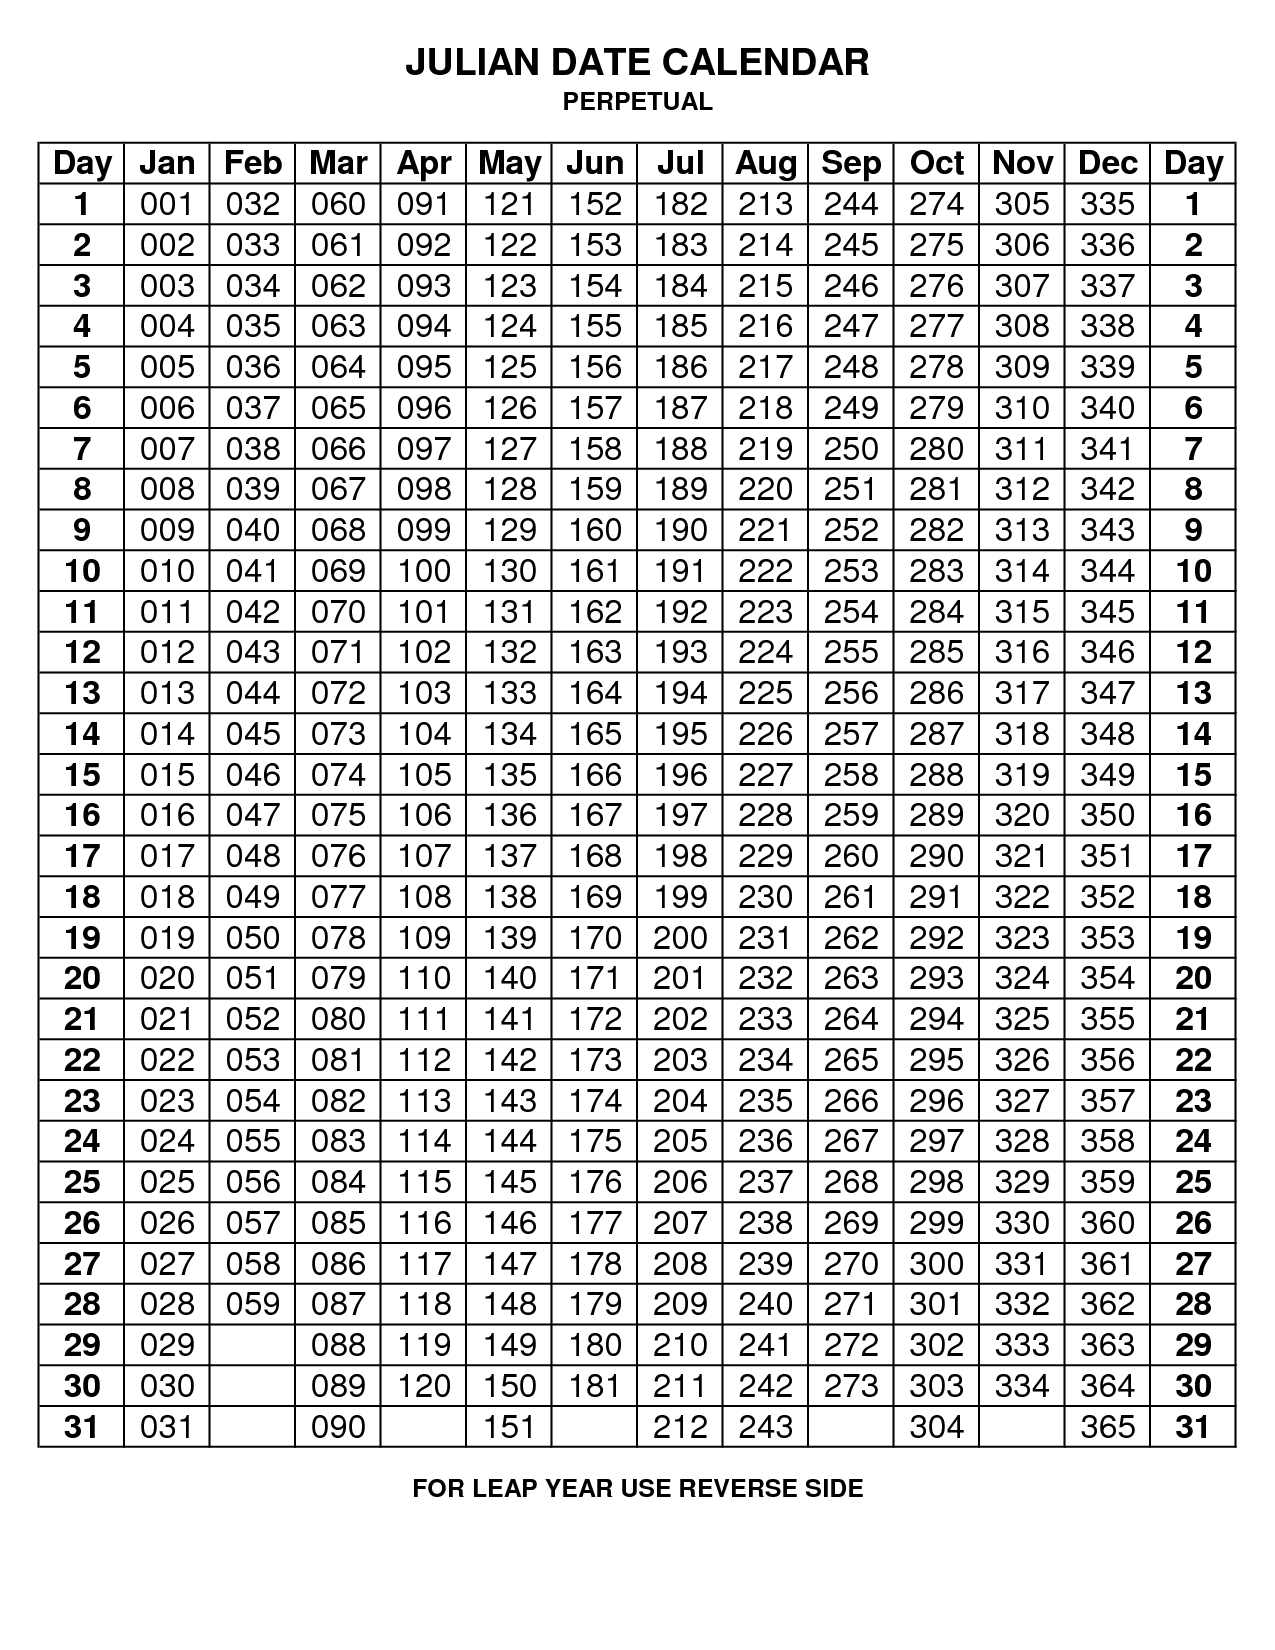 118 Day Of The Year Julian | Template Calendar Printable throughout 118 Day Of The Year Julian